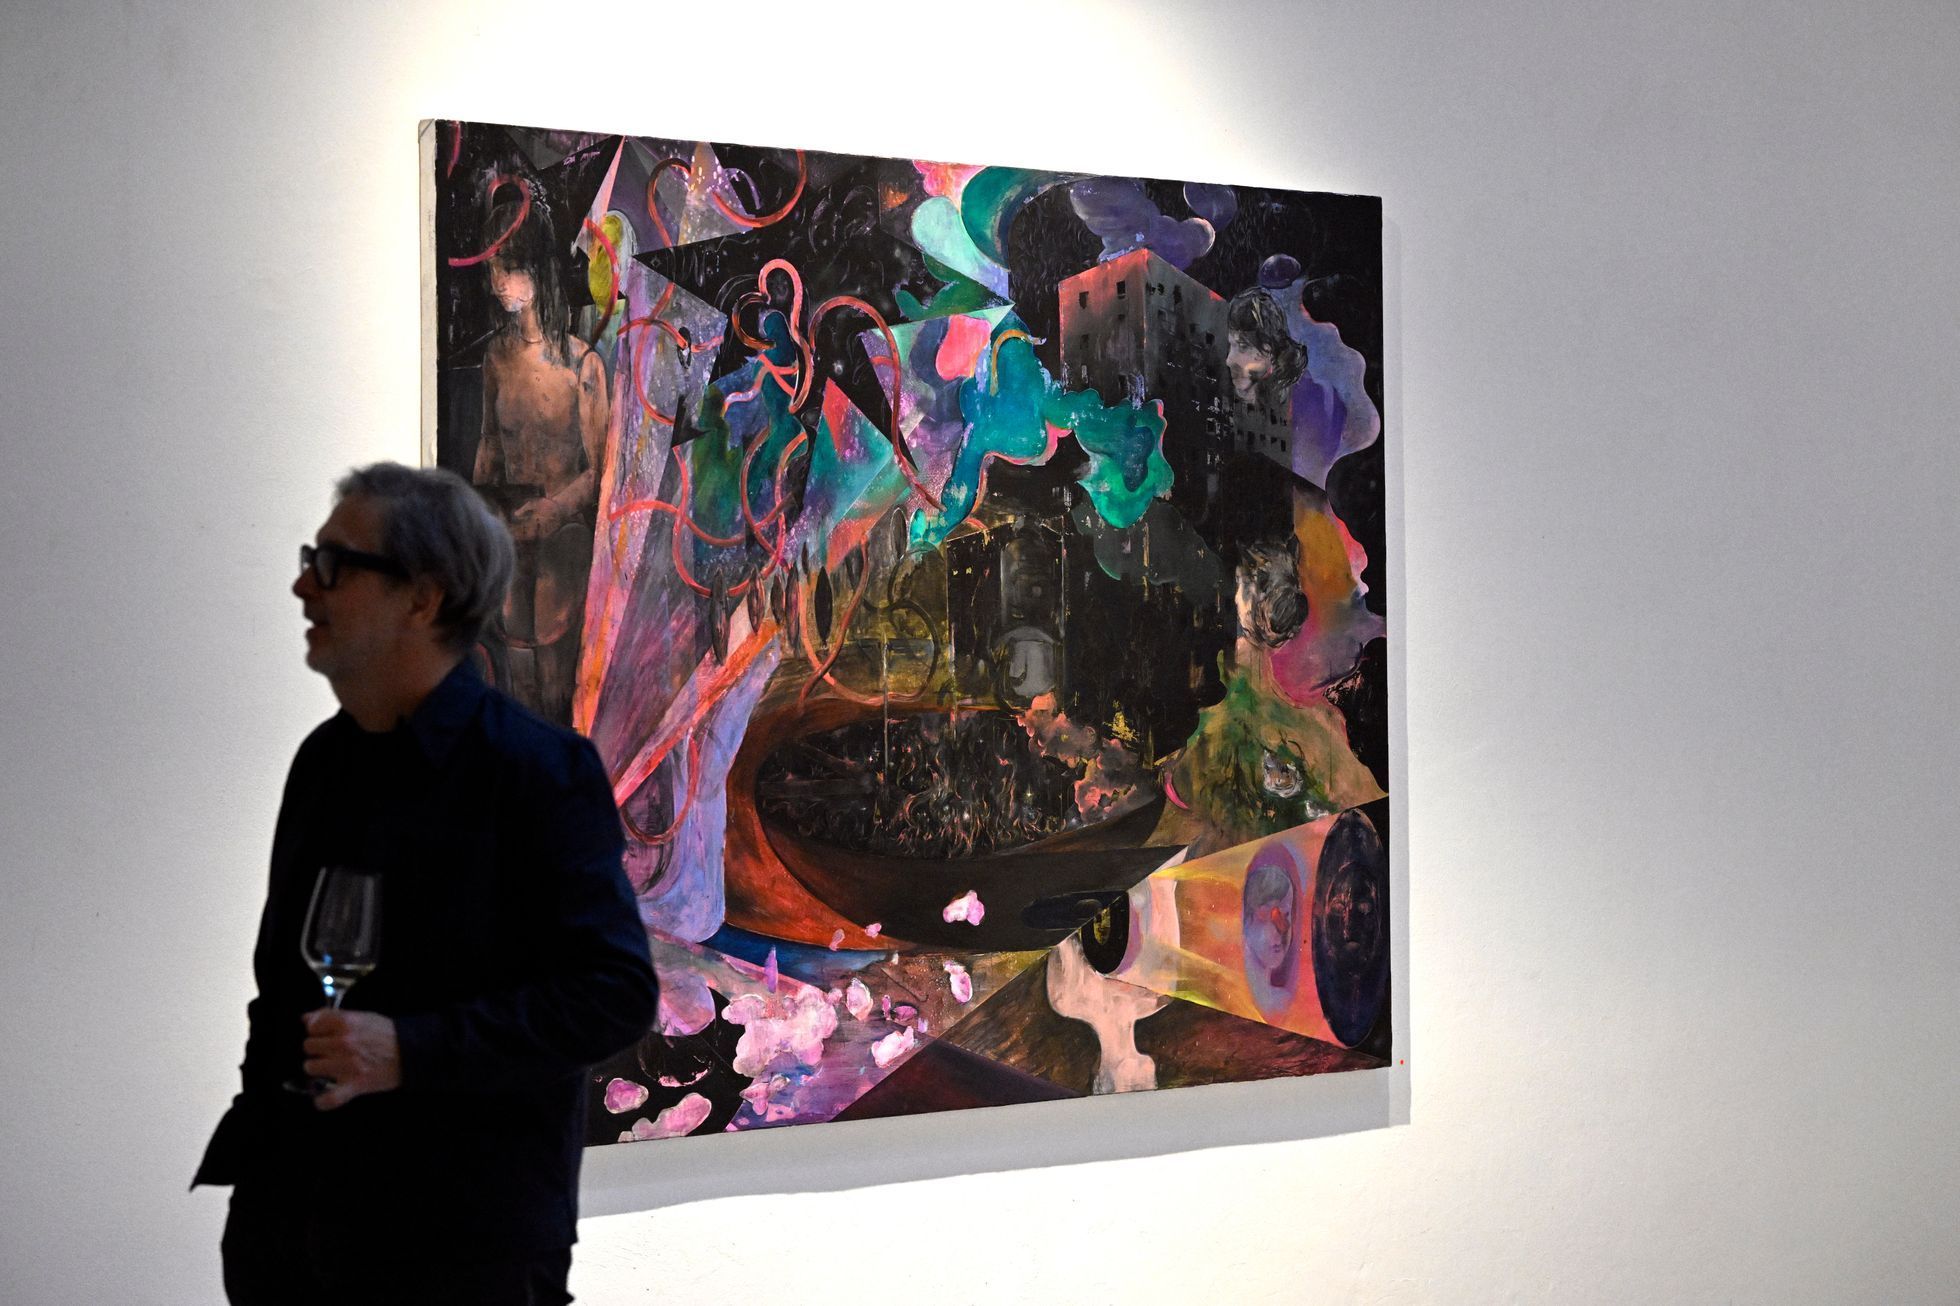 Josef Bolf, Michael Kunze, Nádech surreálna, DSC Gallery, 2022